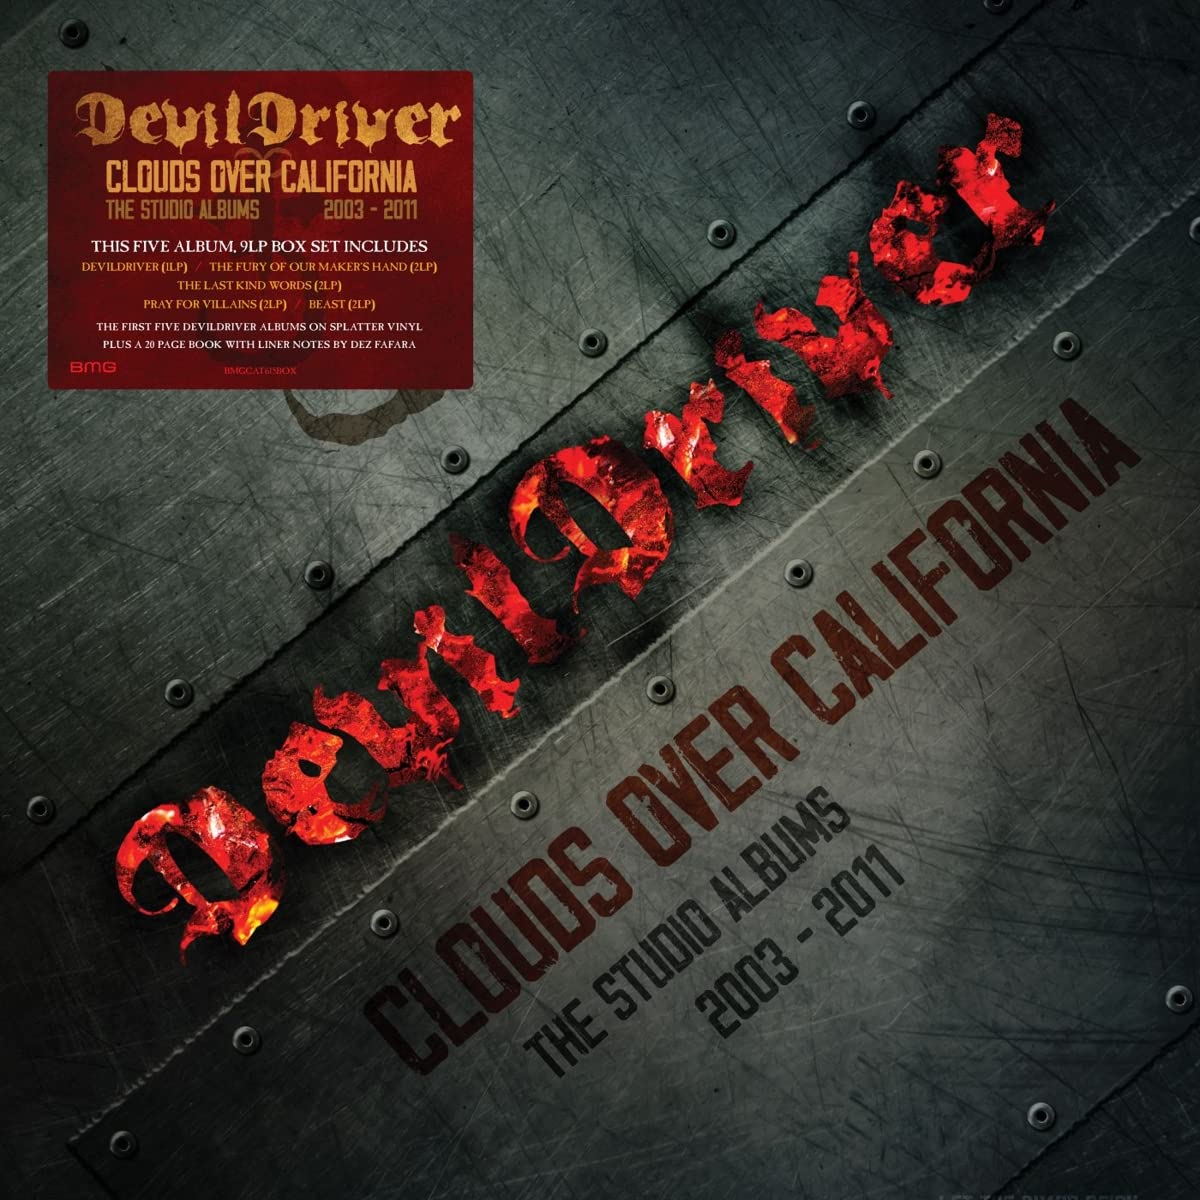 DevilDriver Clouds Over California box set